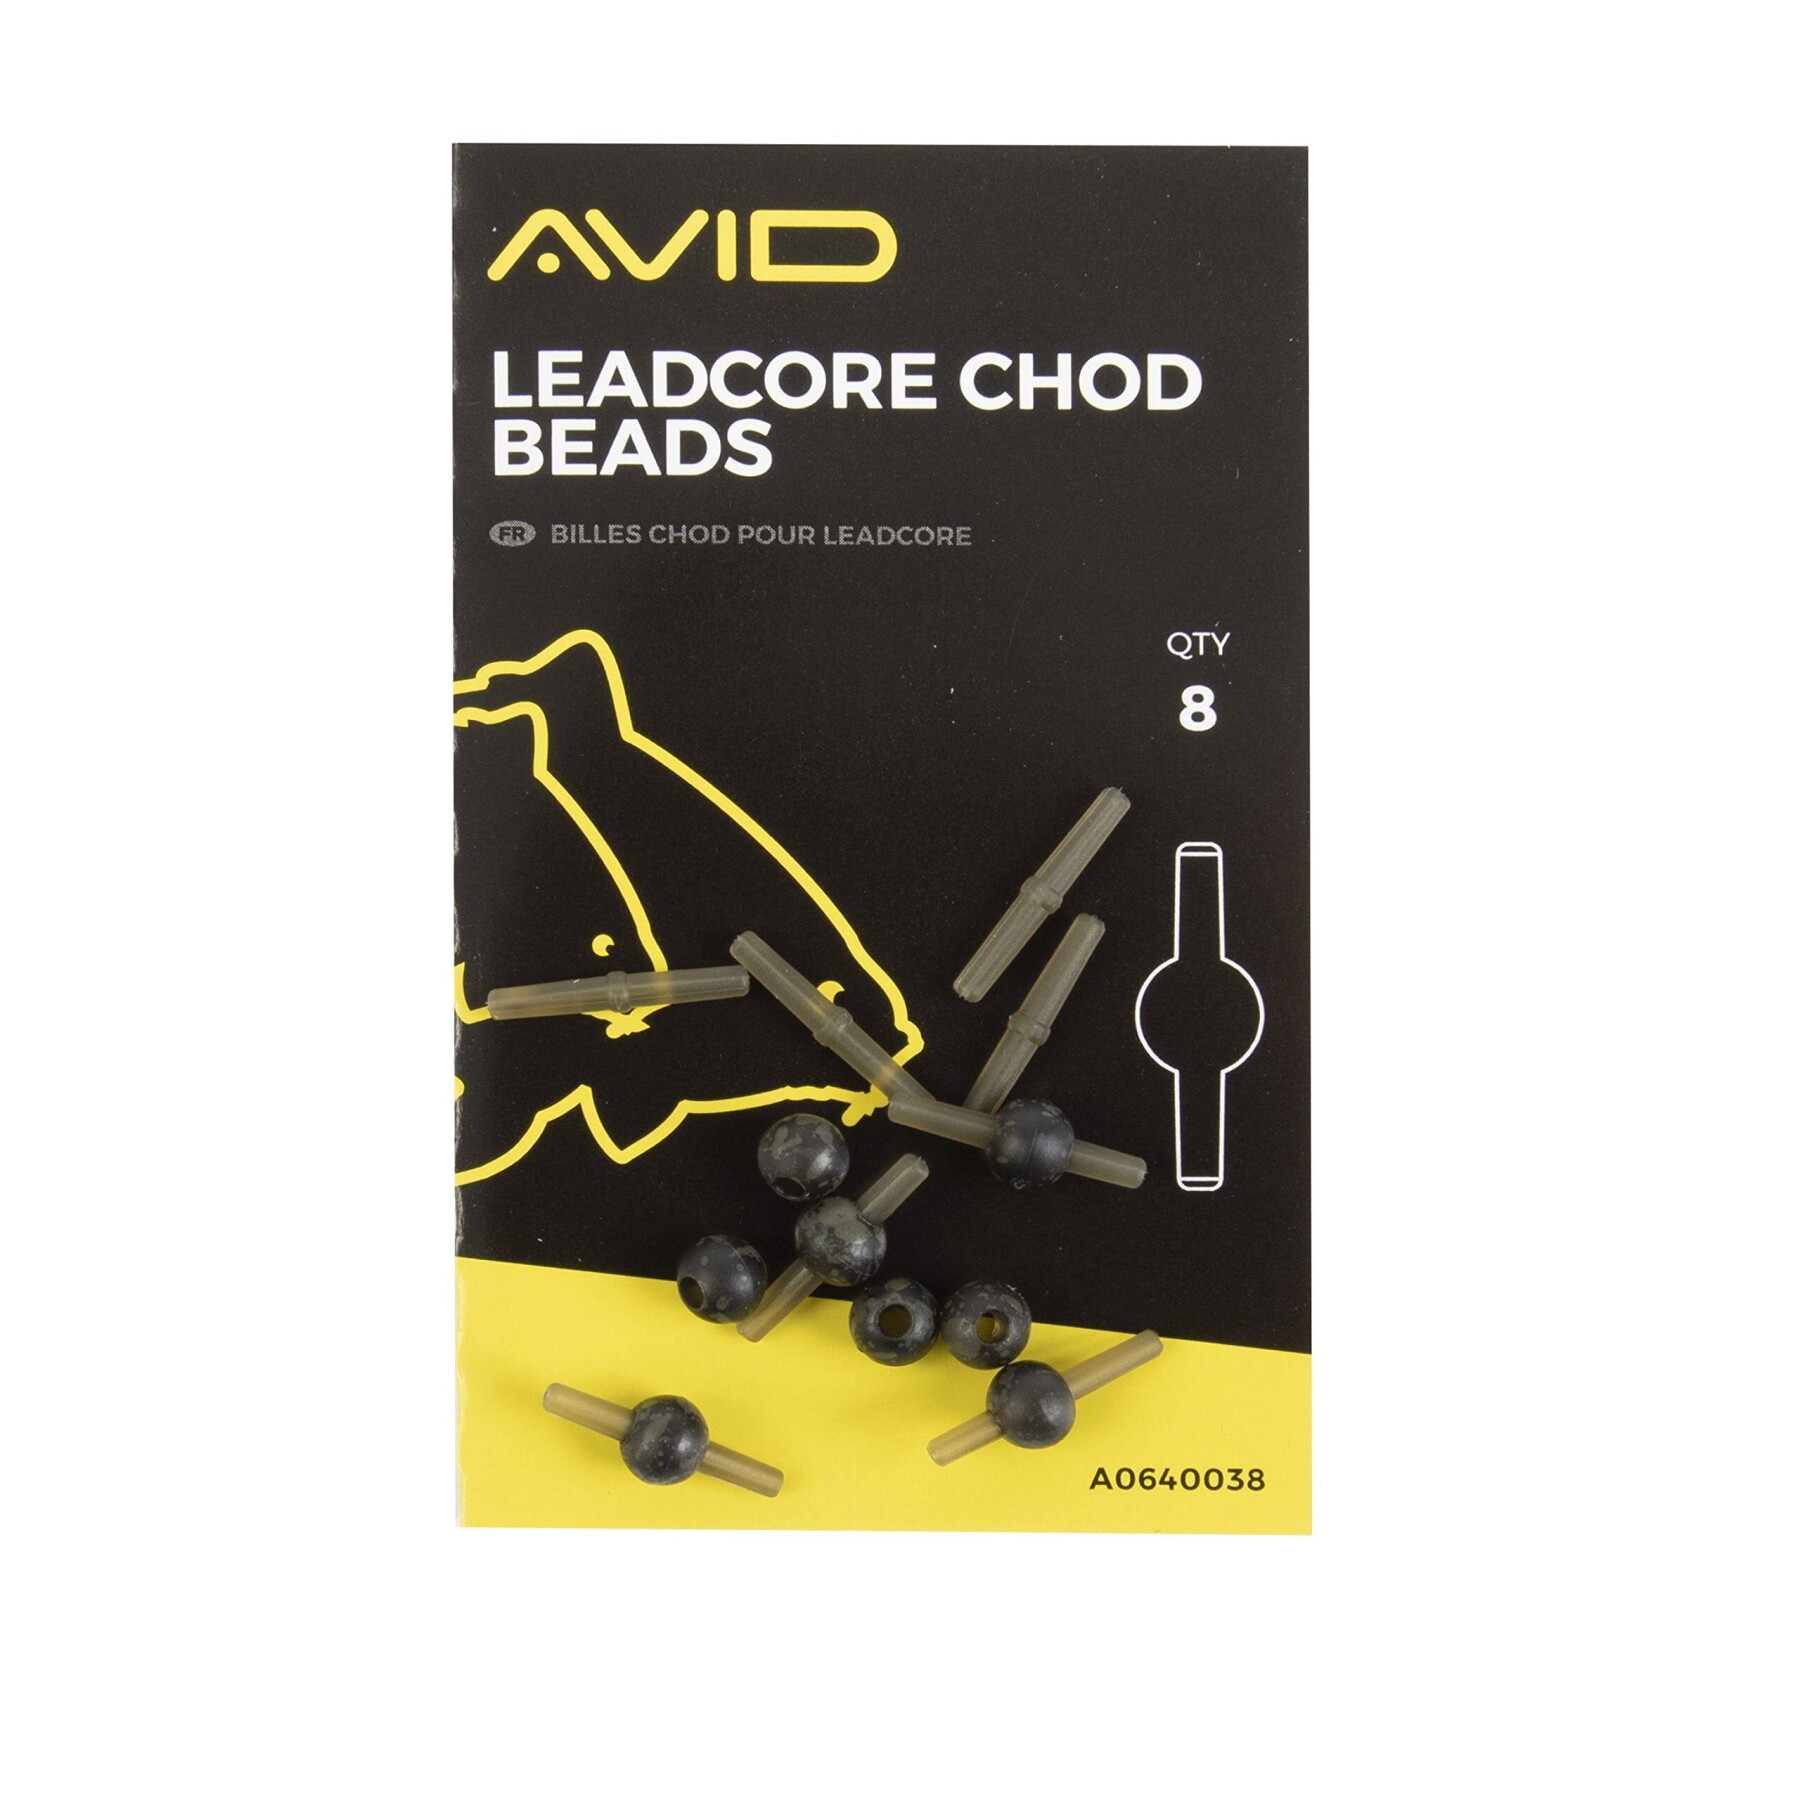 Beads Avid Carp leadcore chod beads x5